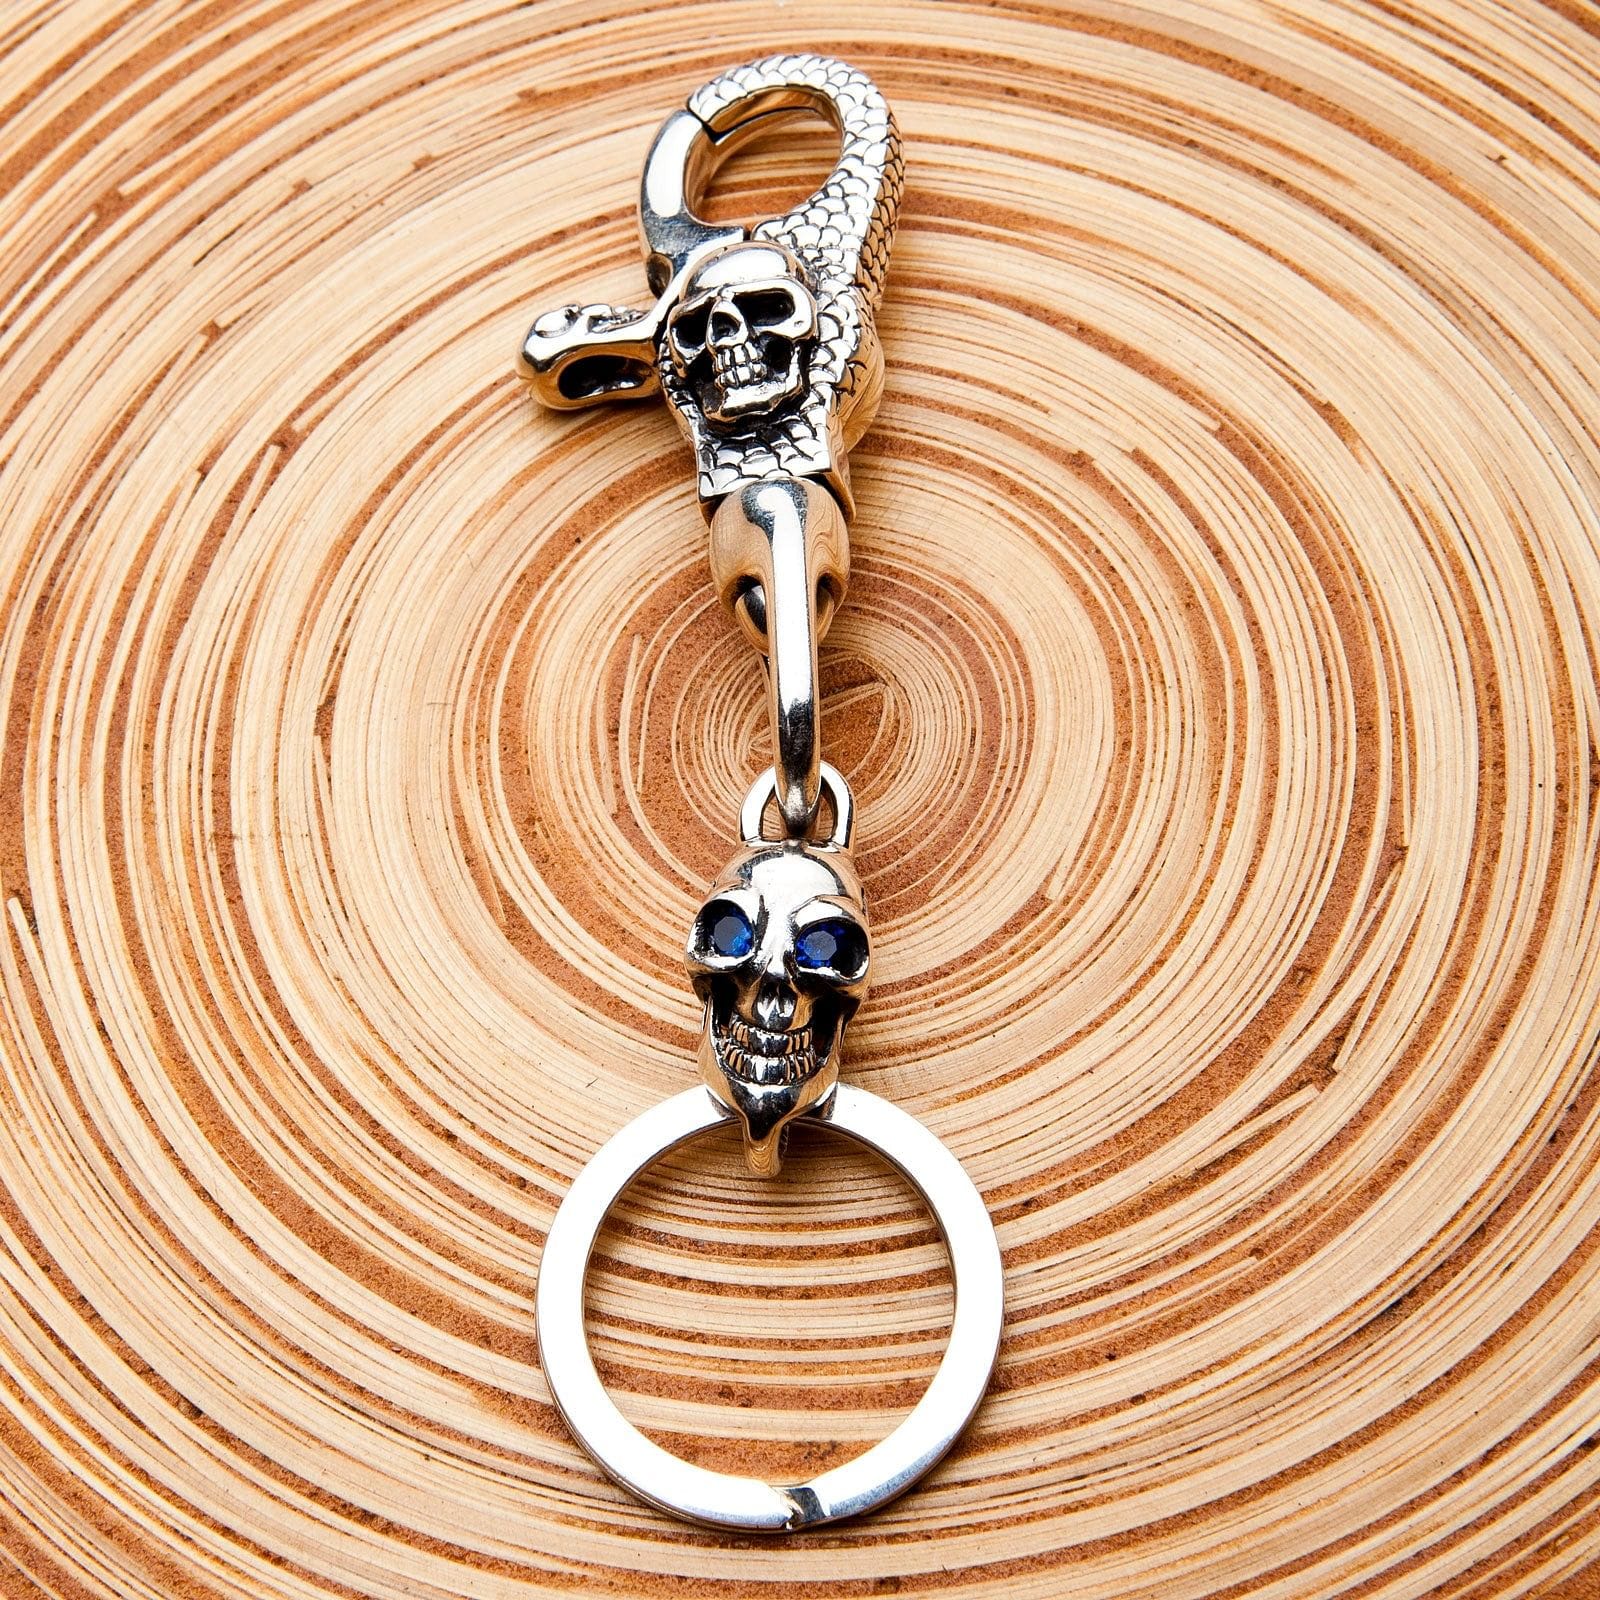 Key Clasp | Scream Skull - for Belt or Wallet / Key Chain | Sanity Jewelry